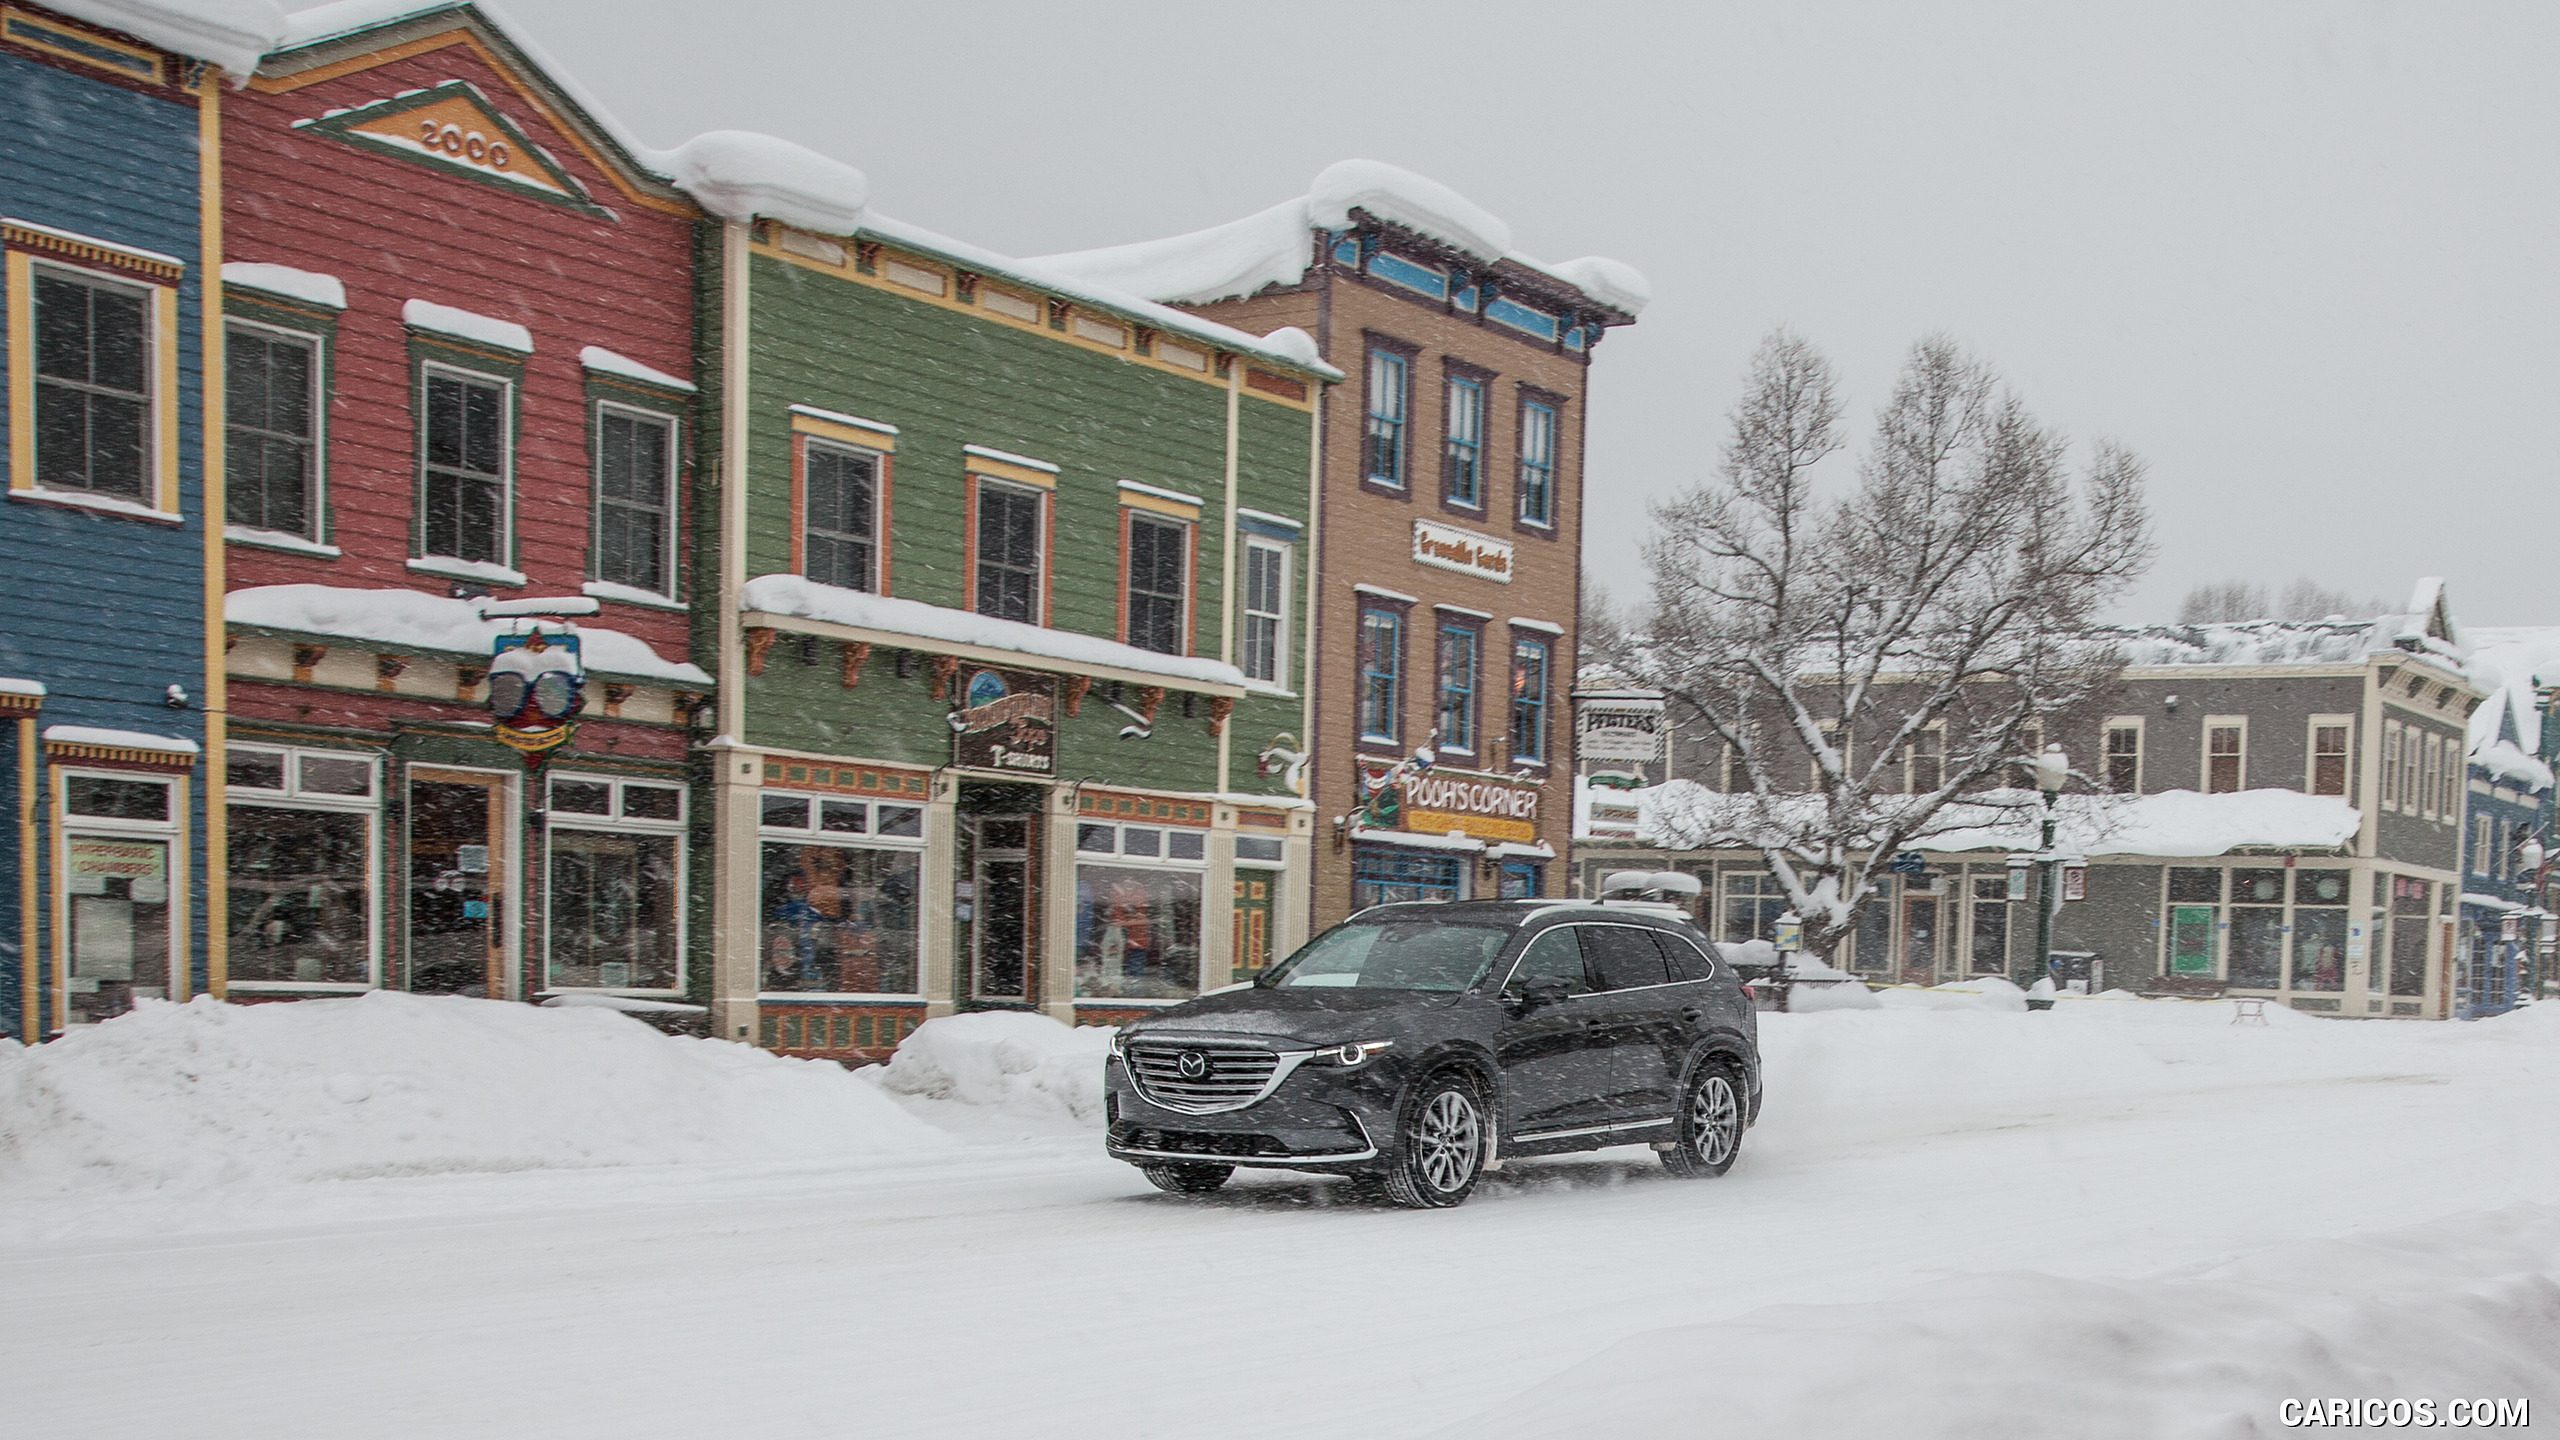 2016 Mazda CX-9 in Snow - Front Three-Quarter, #57 of 69